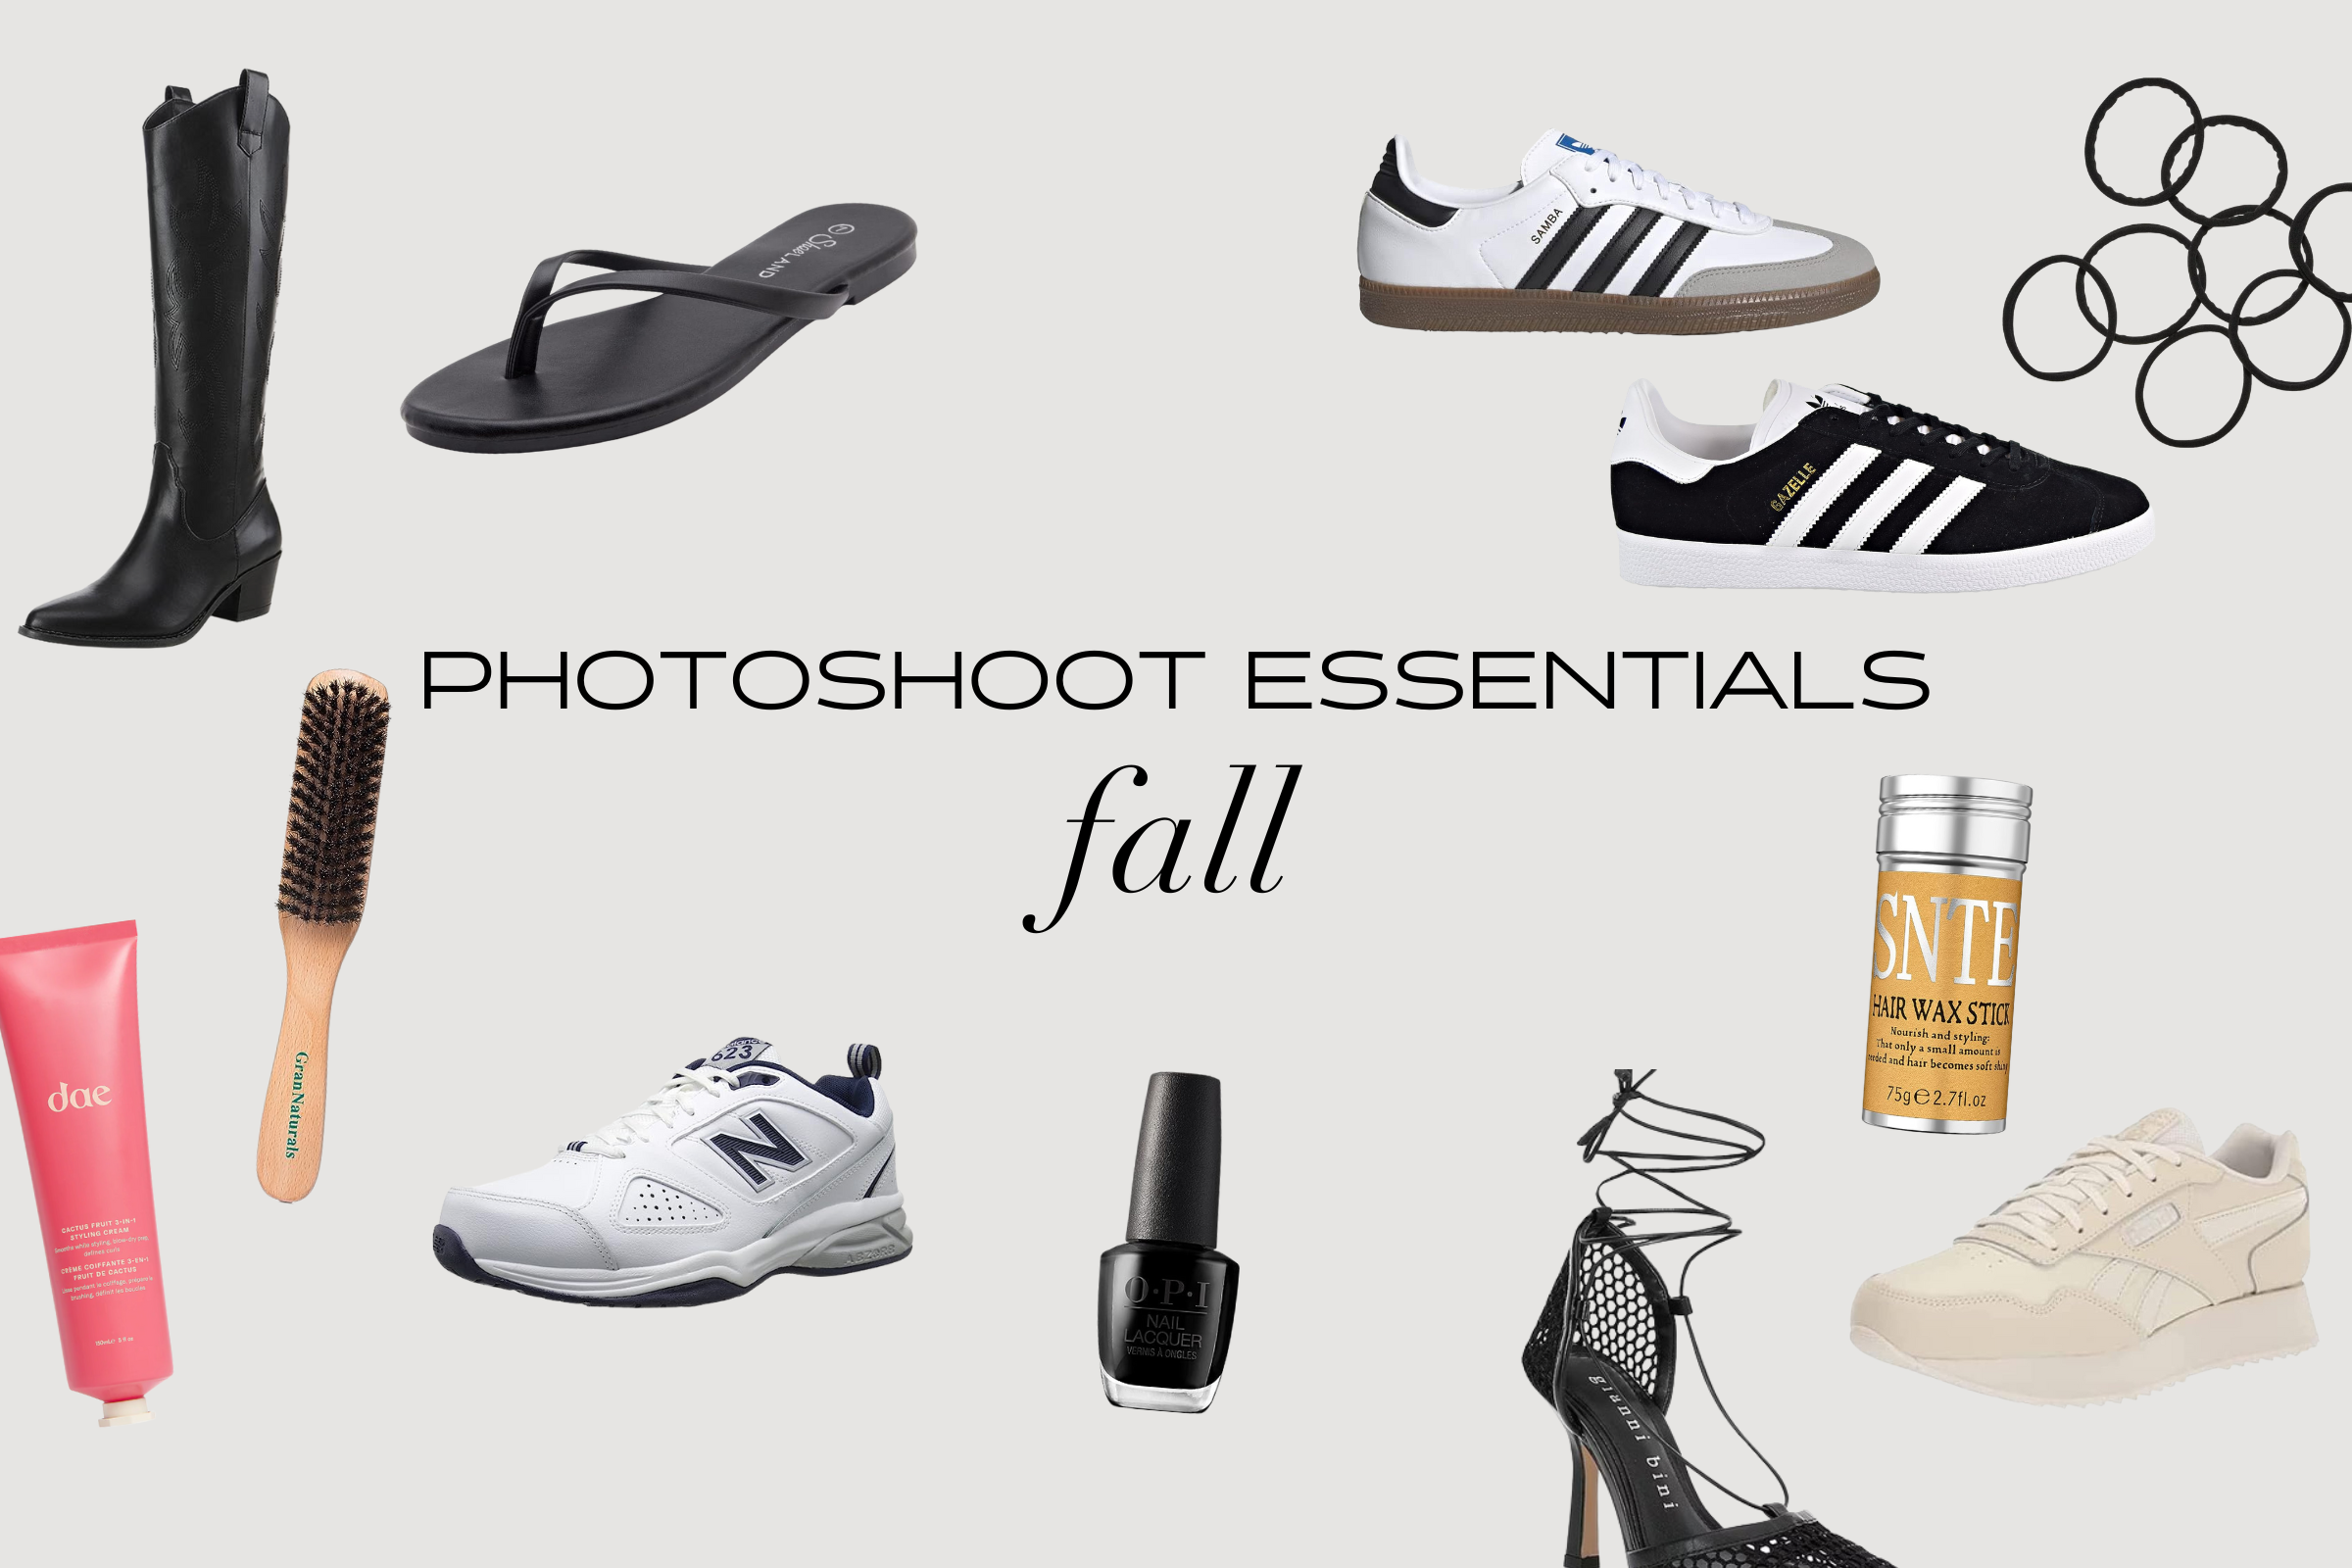 Photoshoot Essentials: Fall